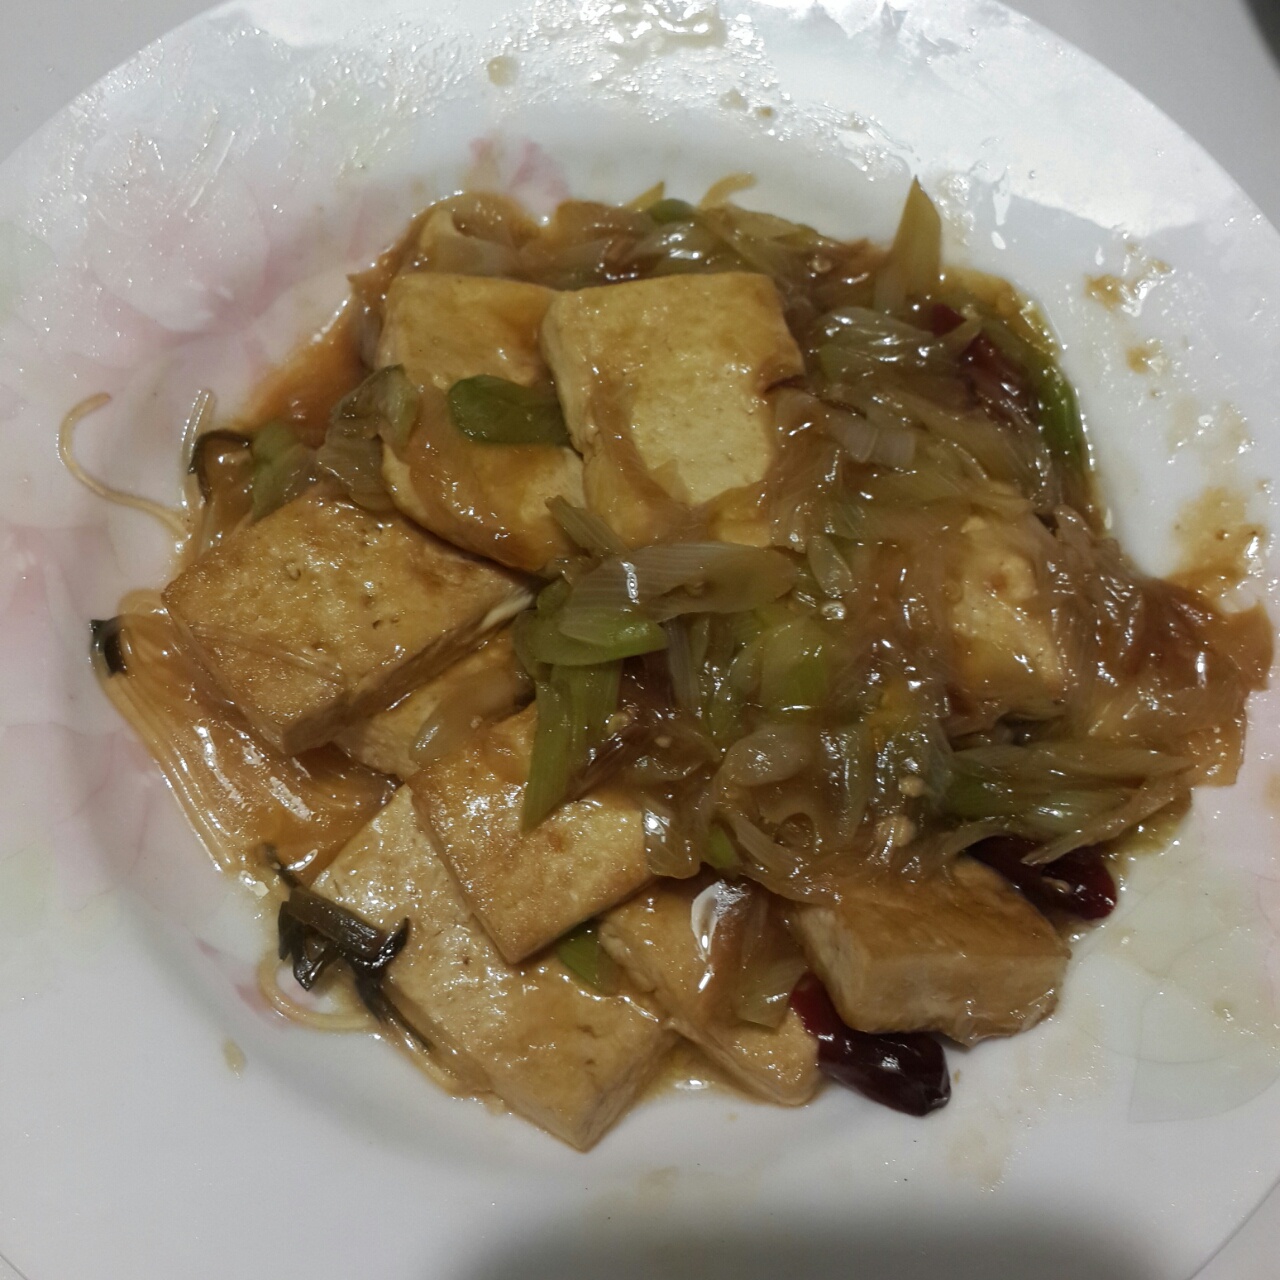 大葱烧豆腐 Spring Onion with Tofu